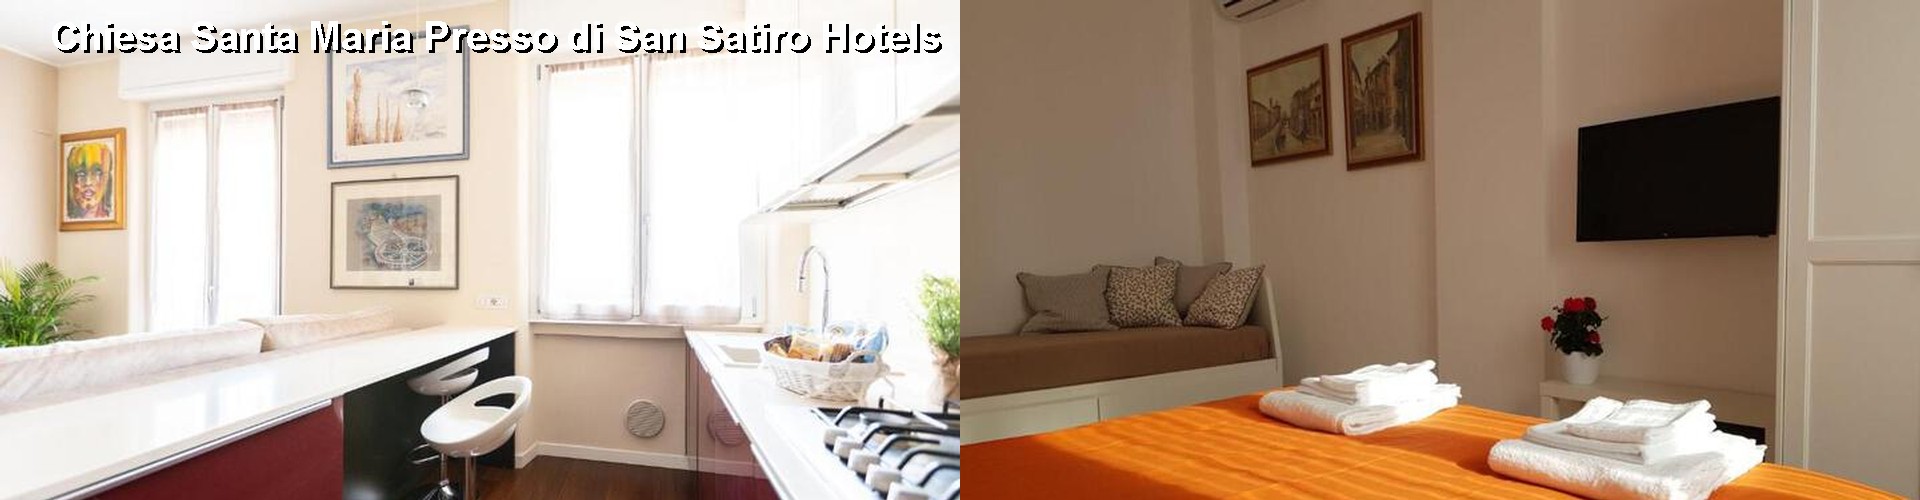 5 Best Hotels near Chiesa Santa Maria Presso di San Satiro